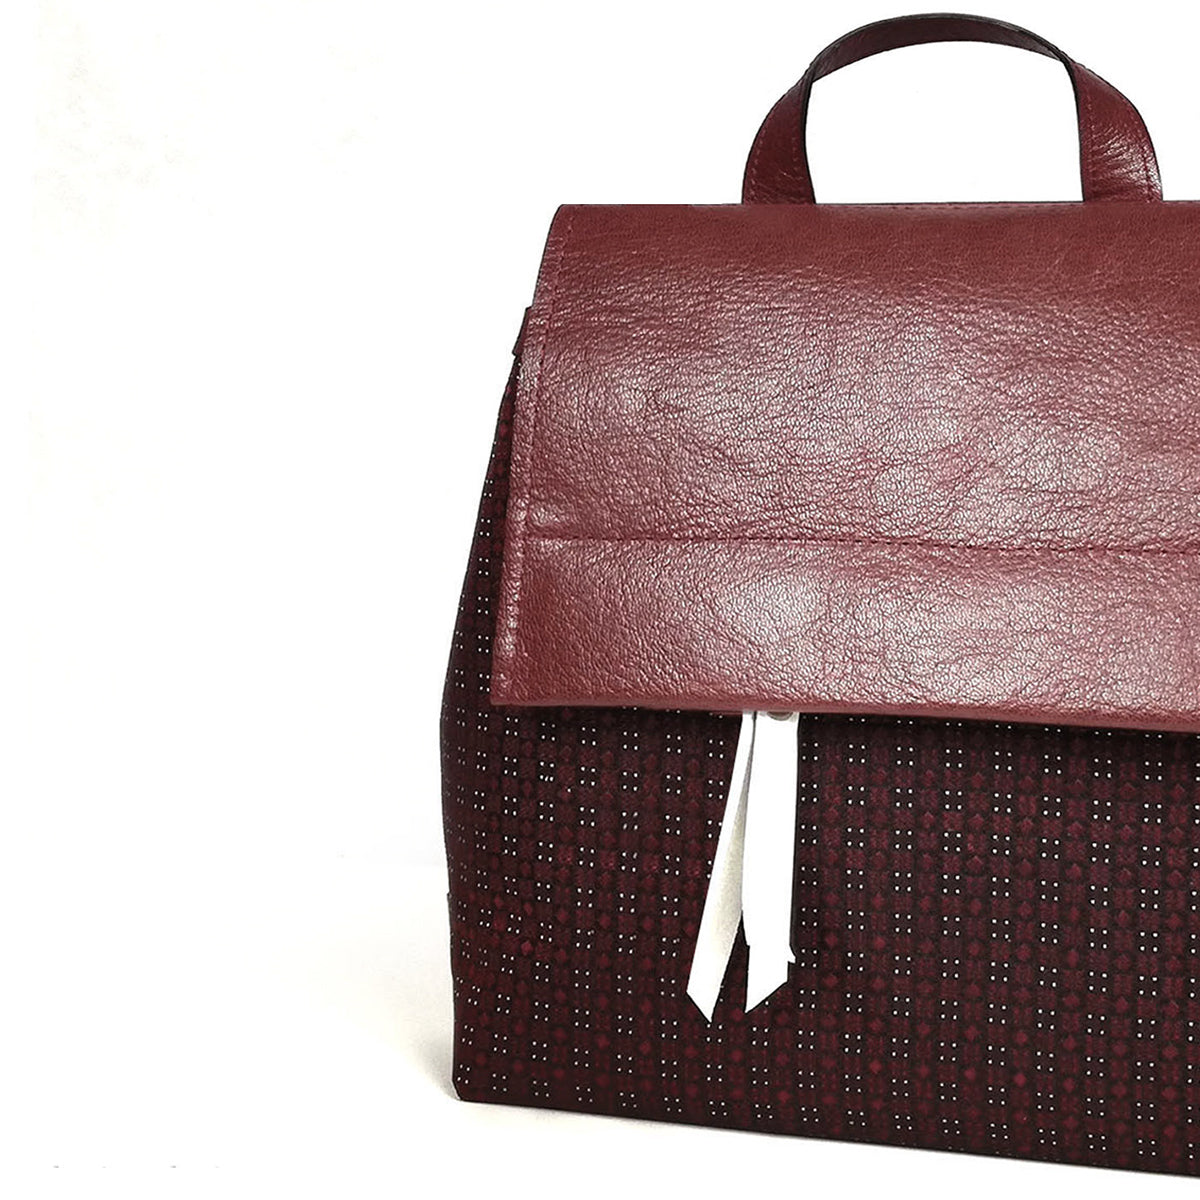 Burgundi leather and fabric backpack | Alice